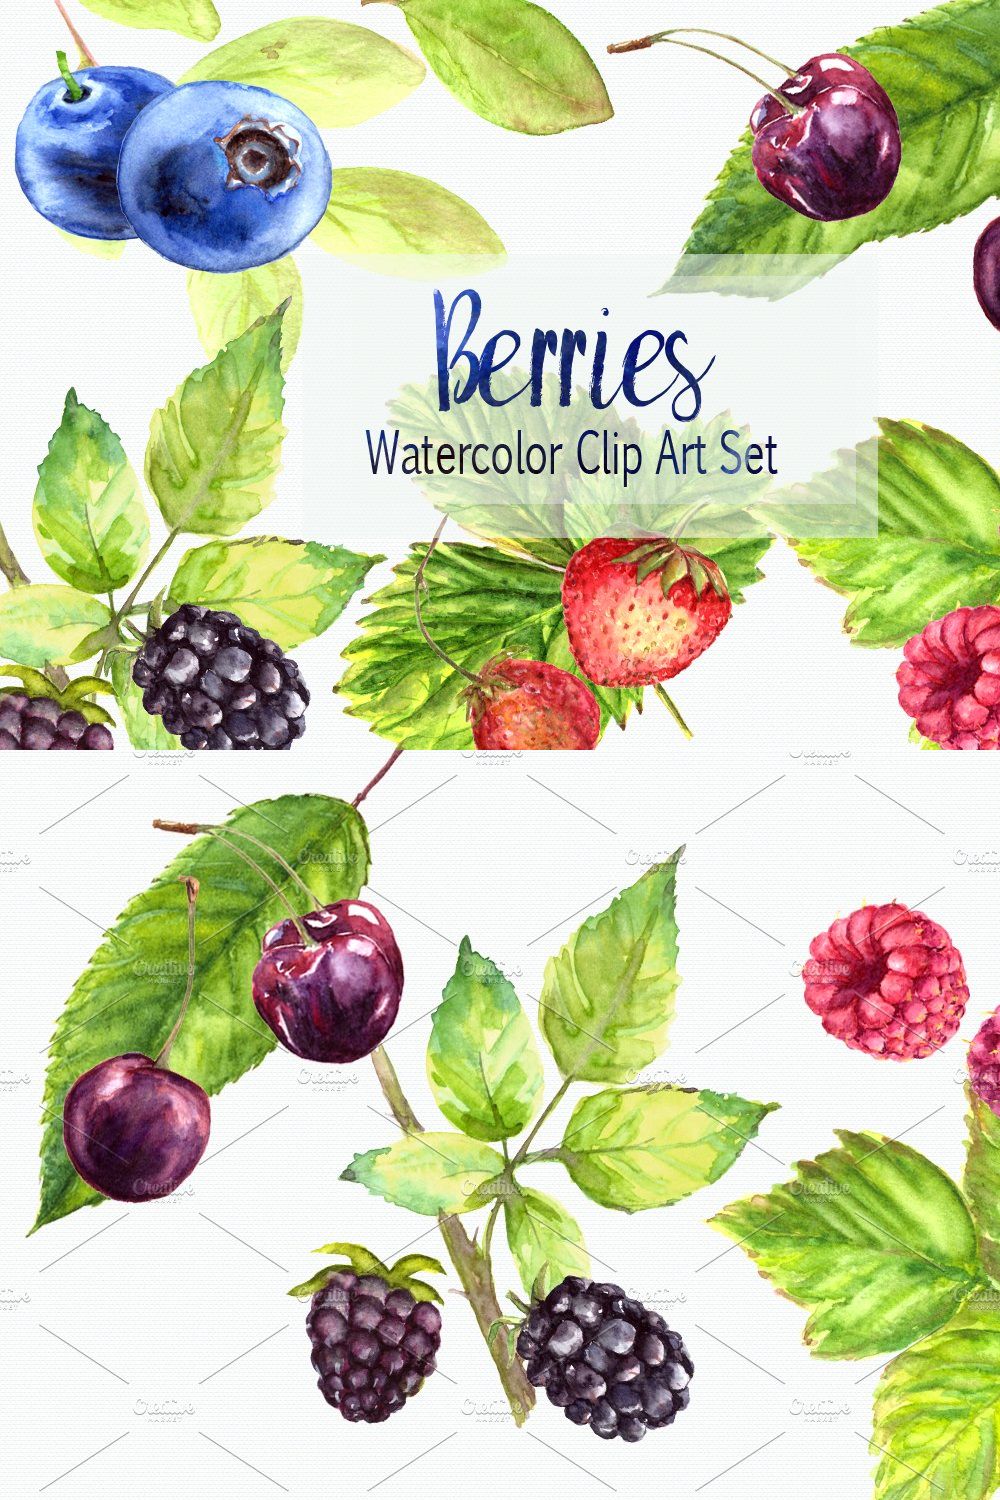 Watercolor Berries Clip Art Set pinterest preview image.